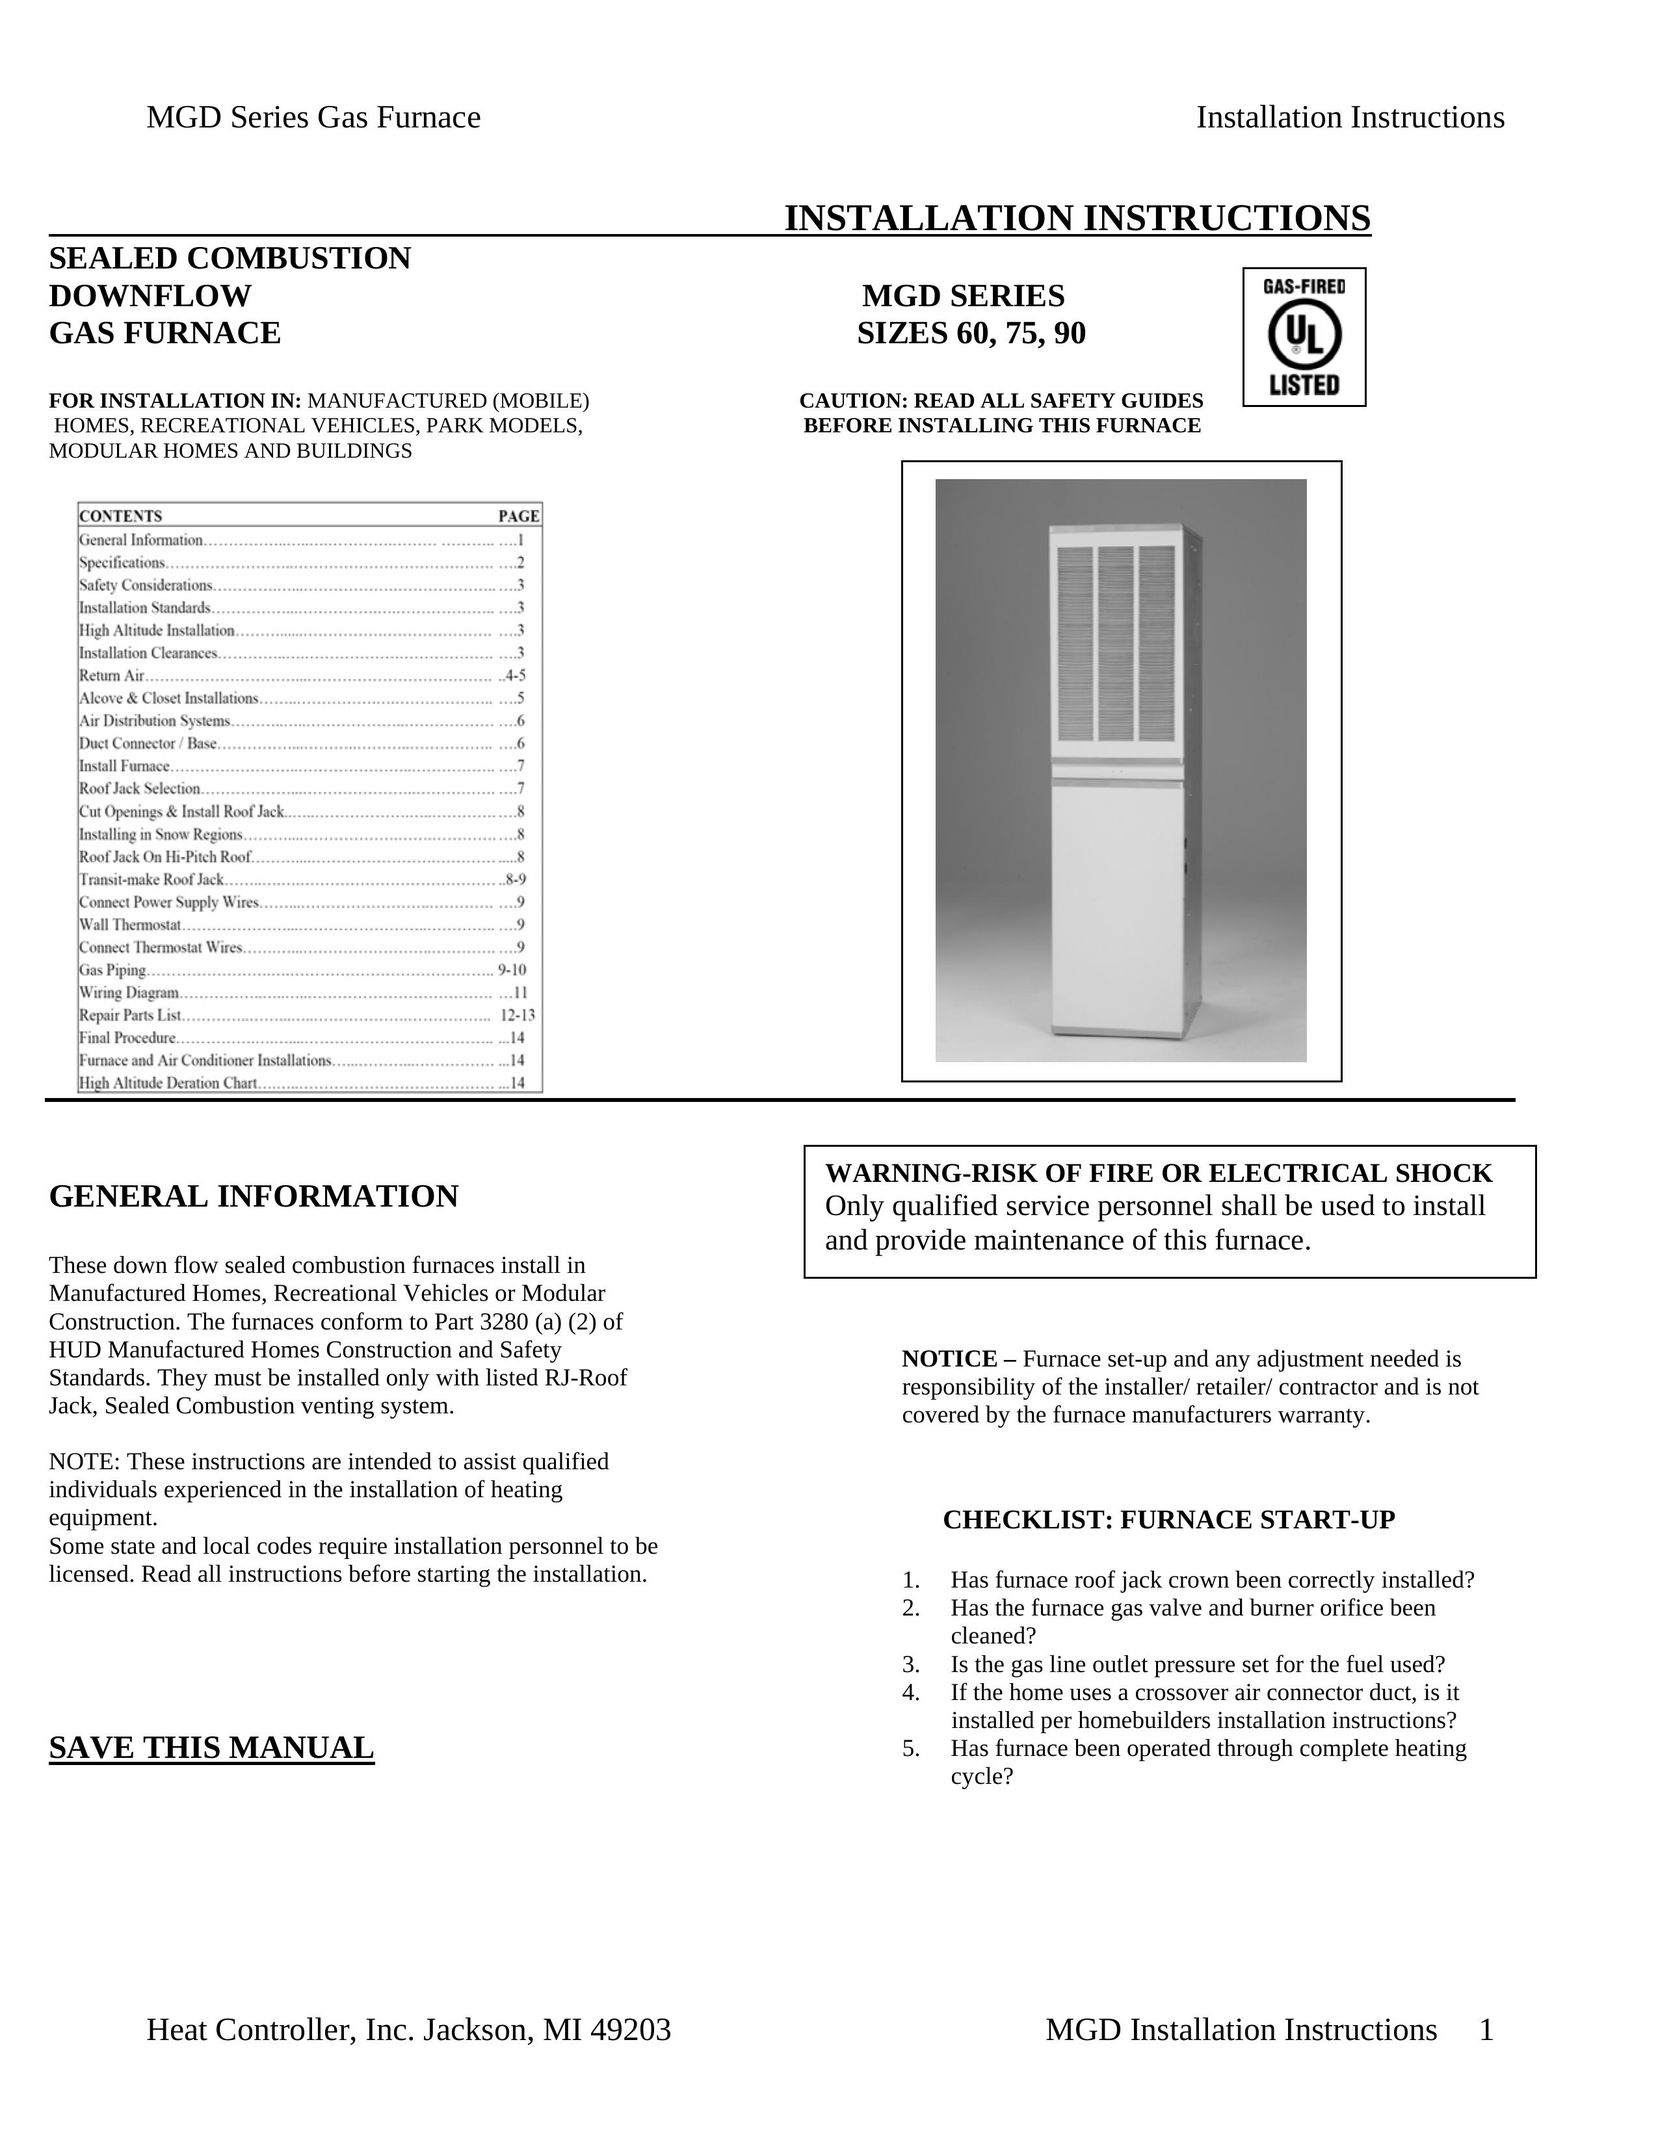 Heat Controller MGD75-E3A Furnace User Manual